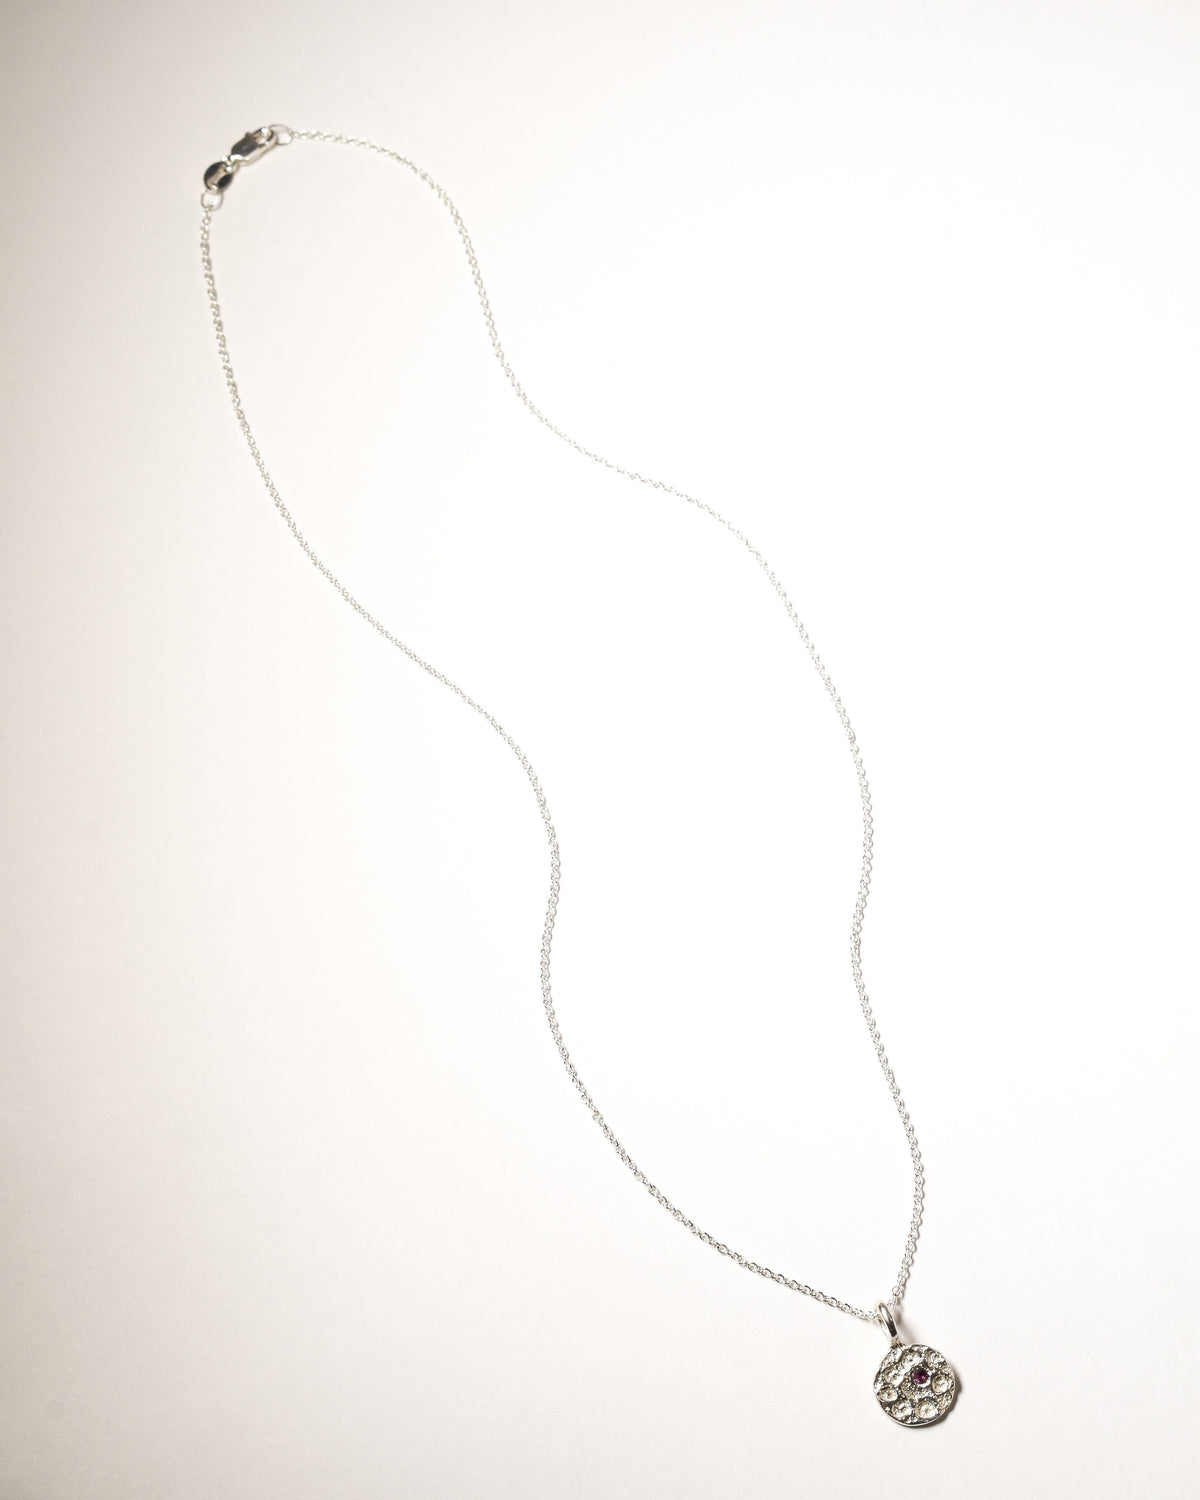 Garnet Birthstone Necklace - January - Sterling Silver